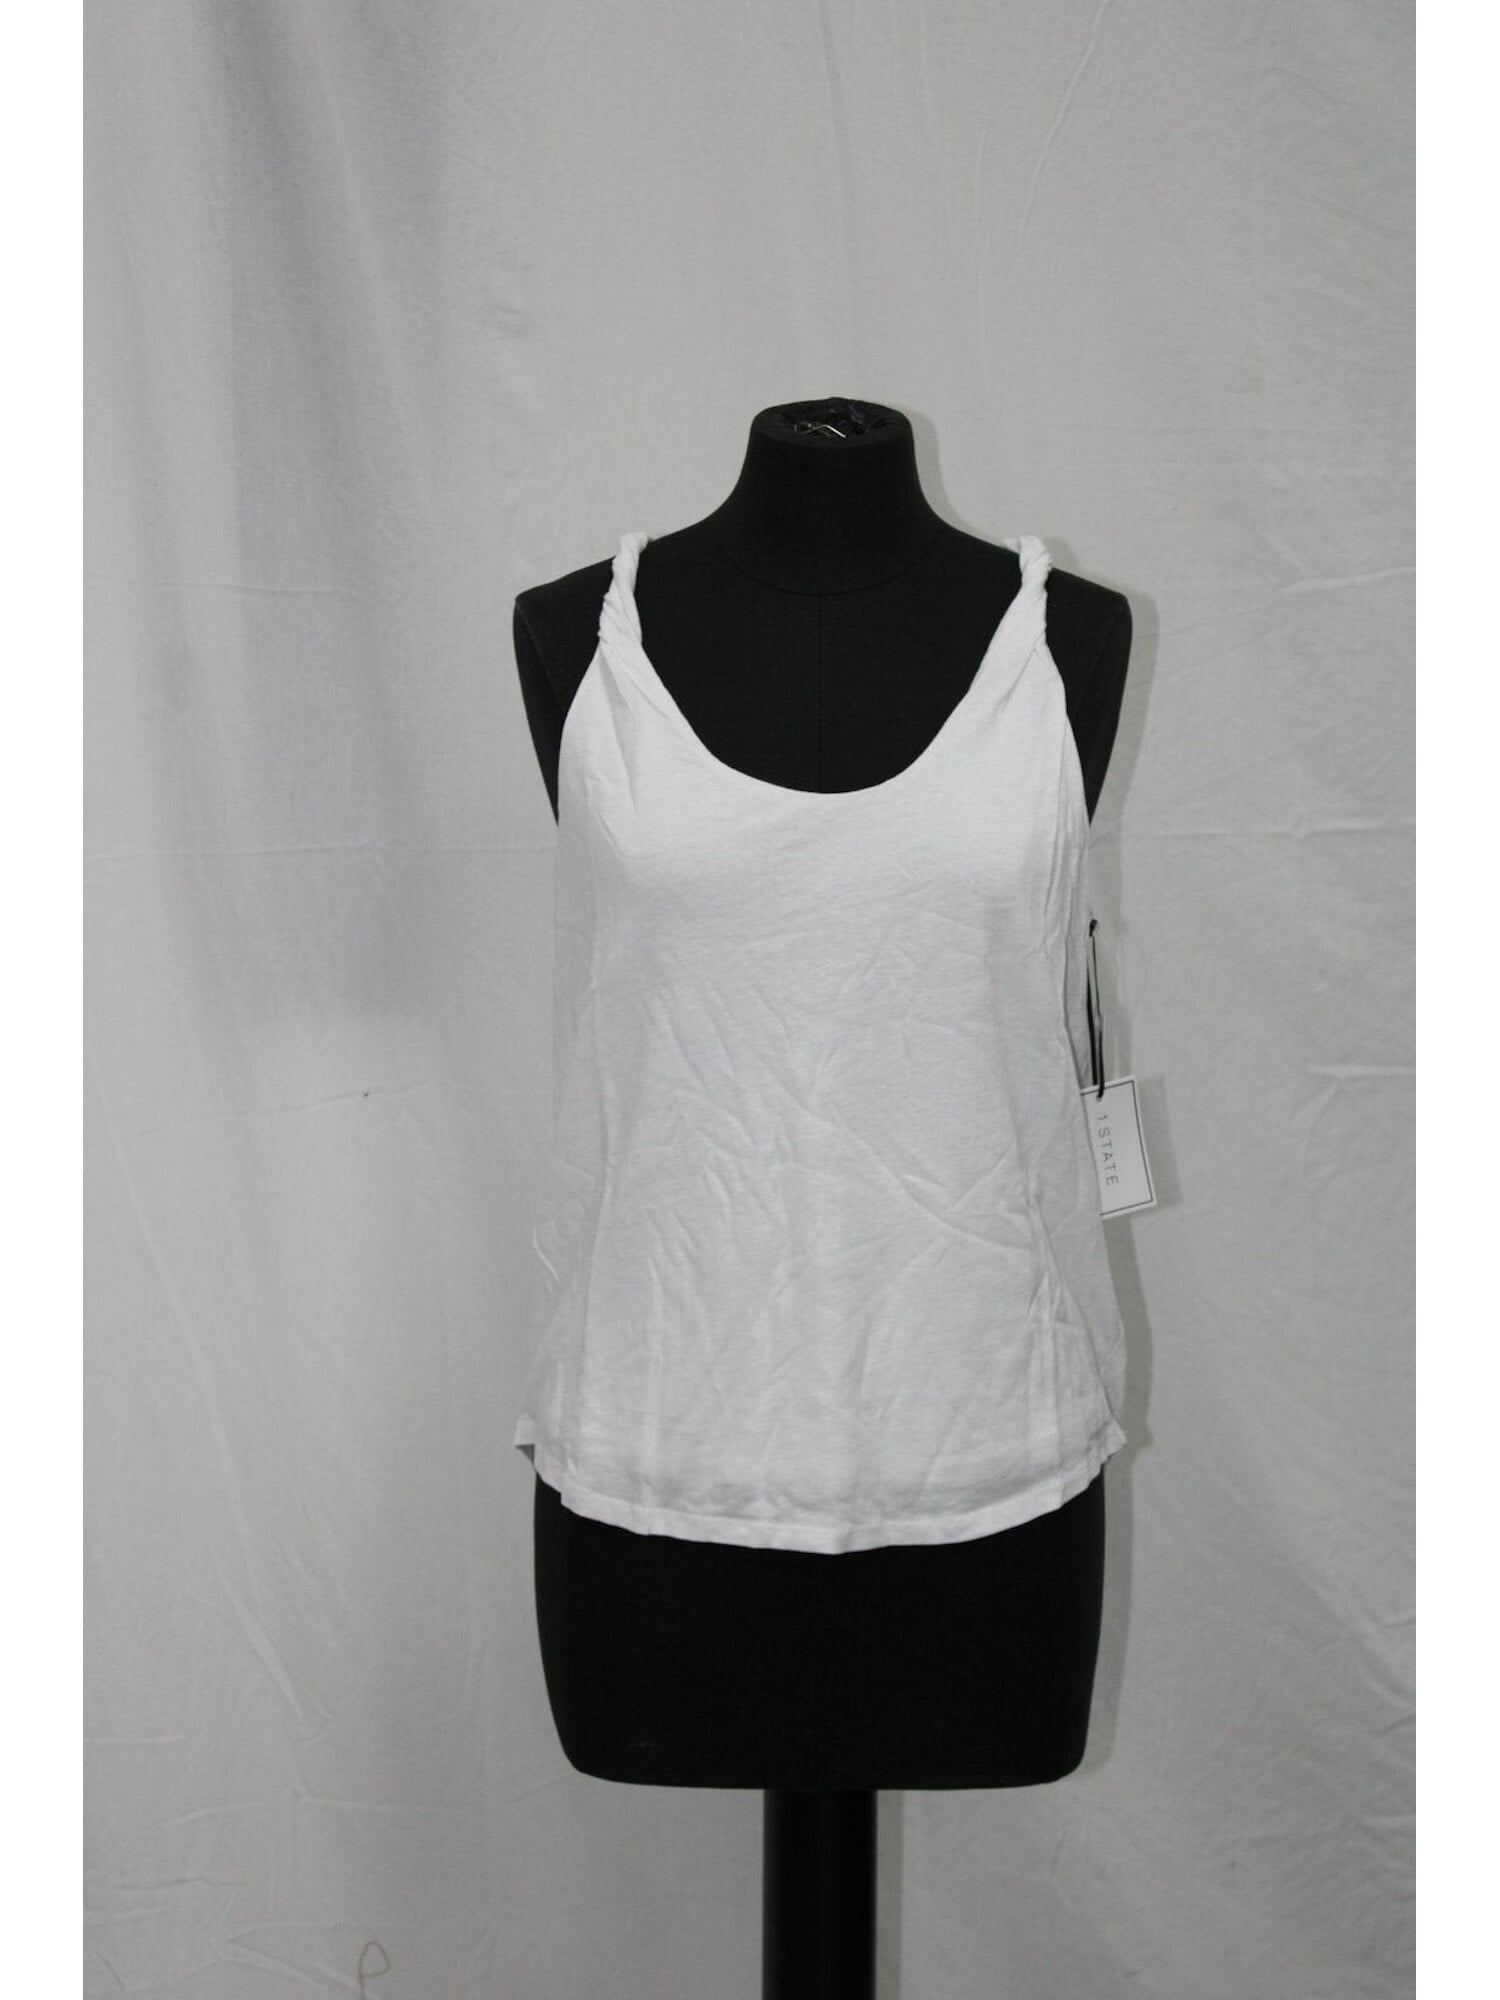 INC Womens Plaid Ruffled Sleeveless Pullover Top Blouse Plus BHFO 0229